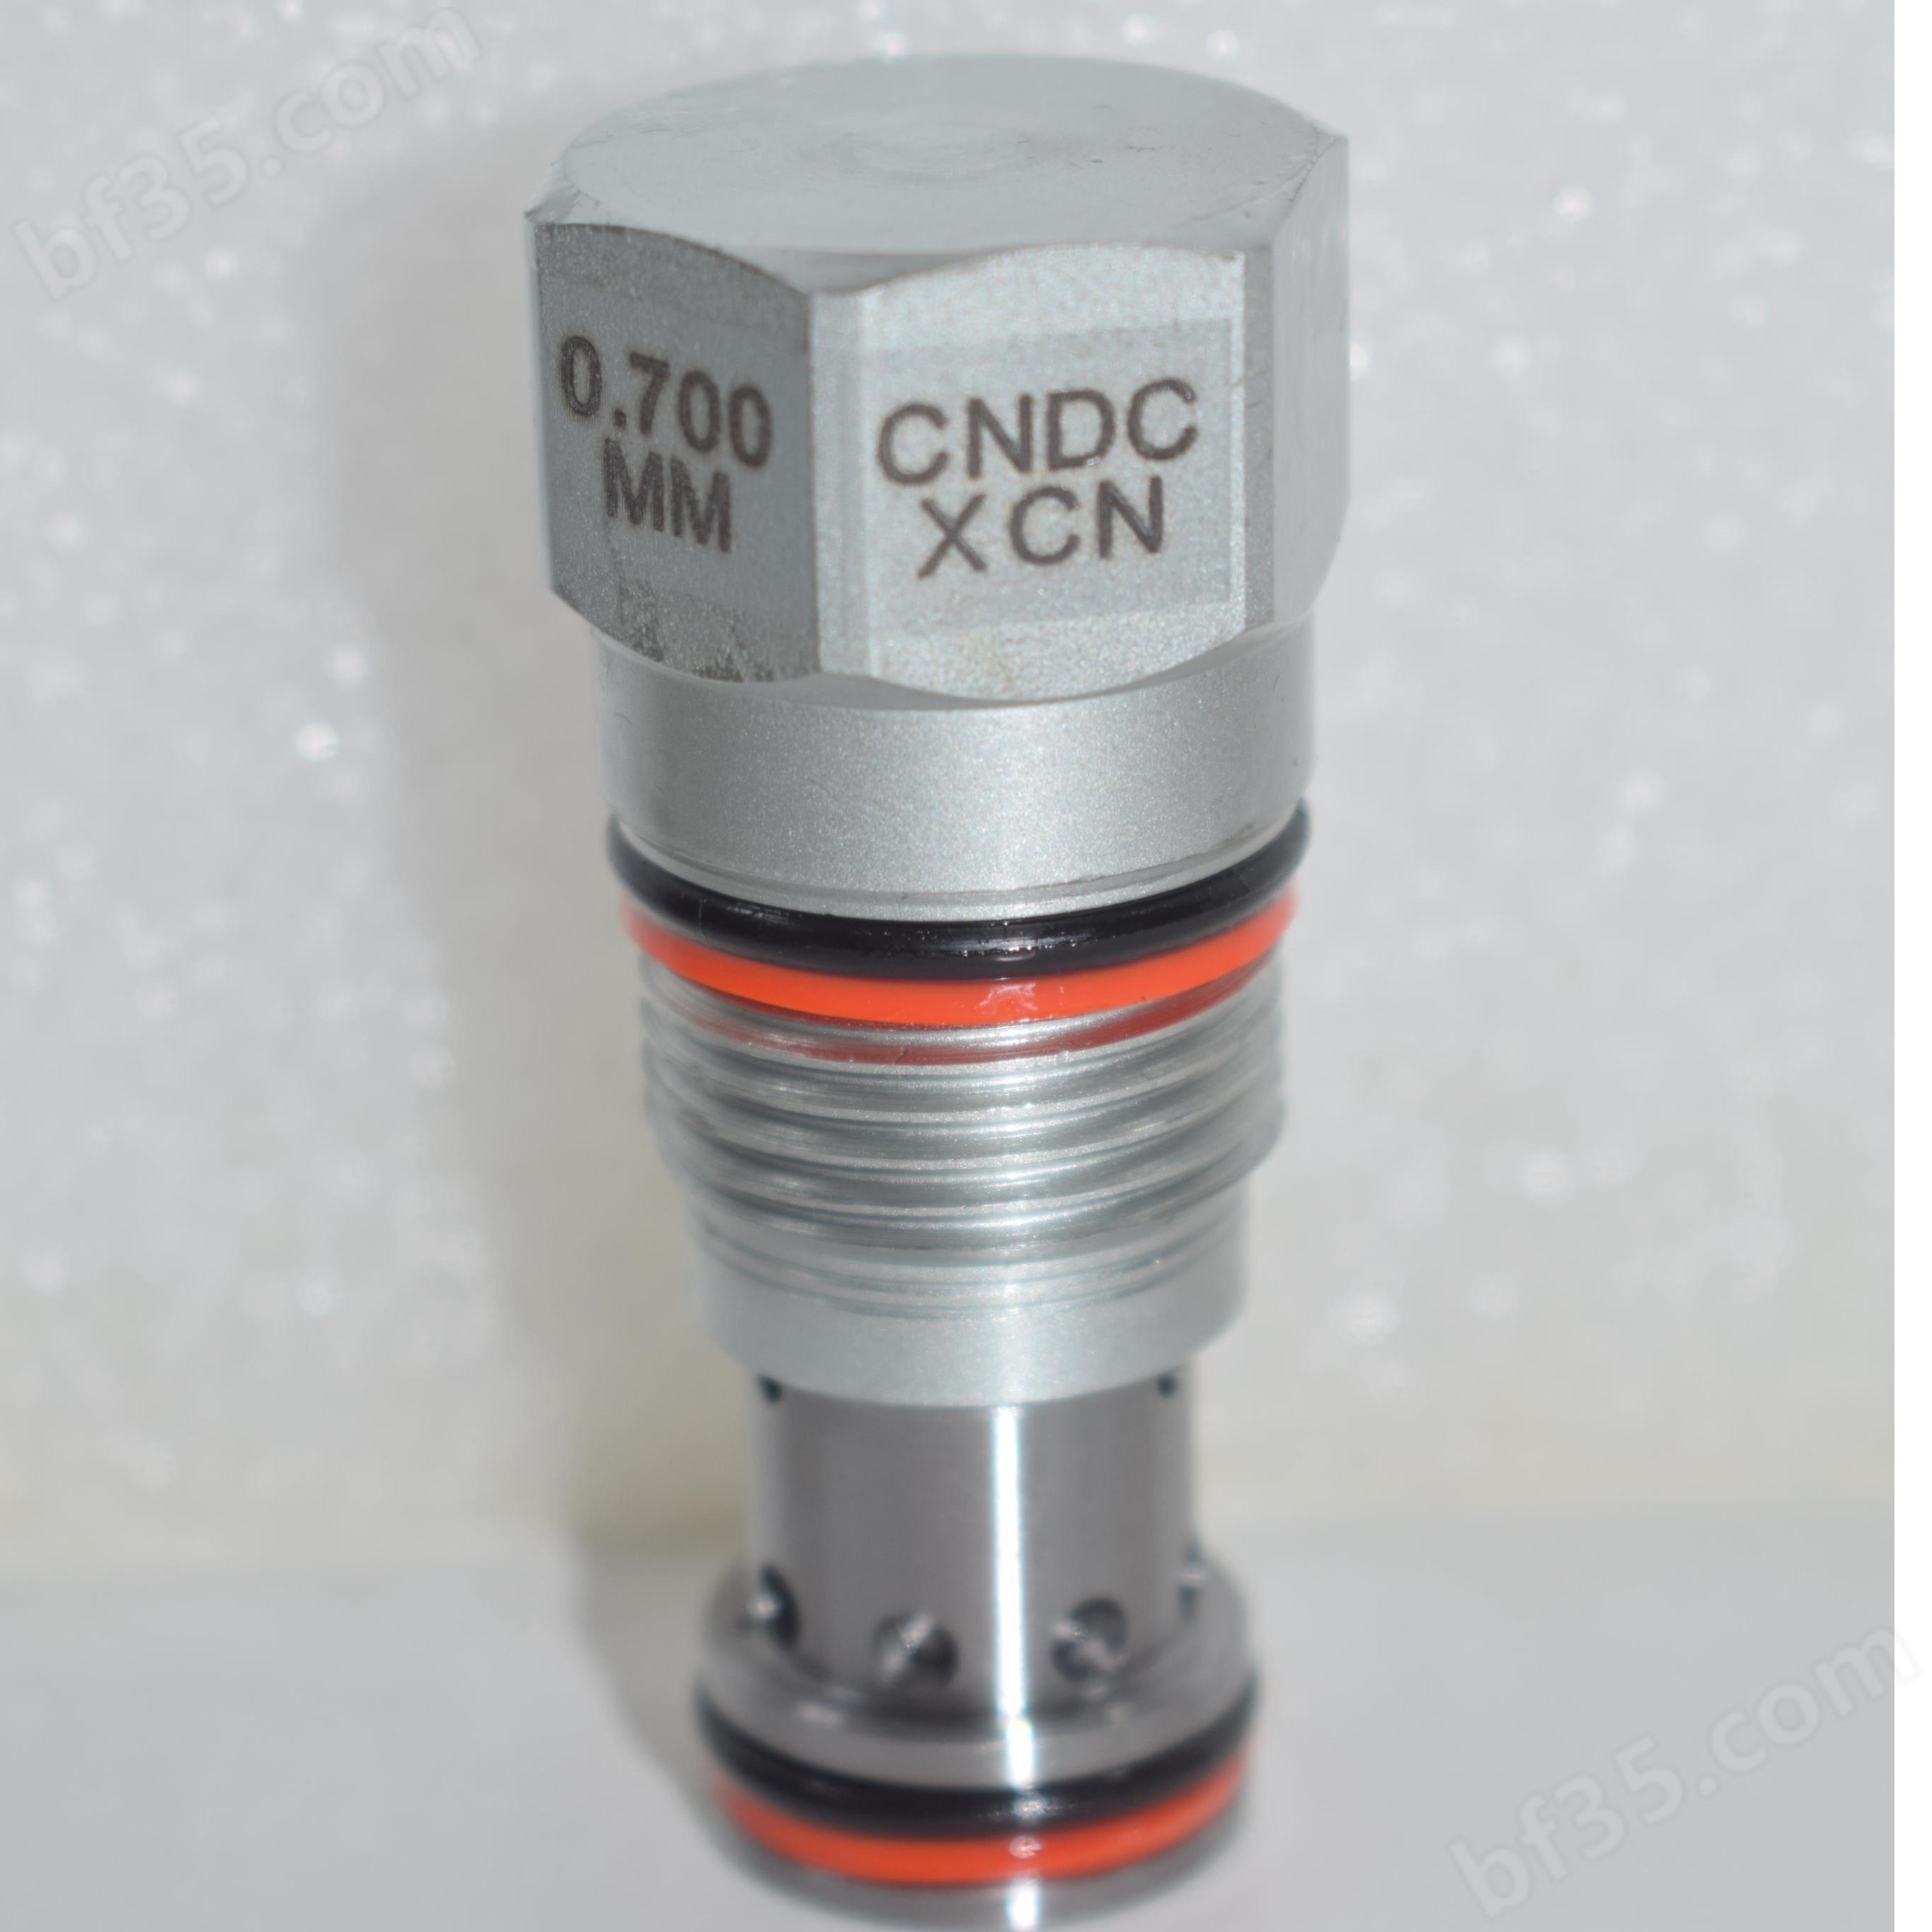 CNDC- XCN